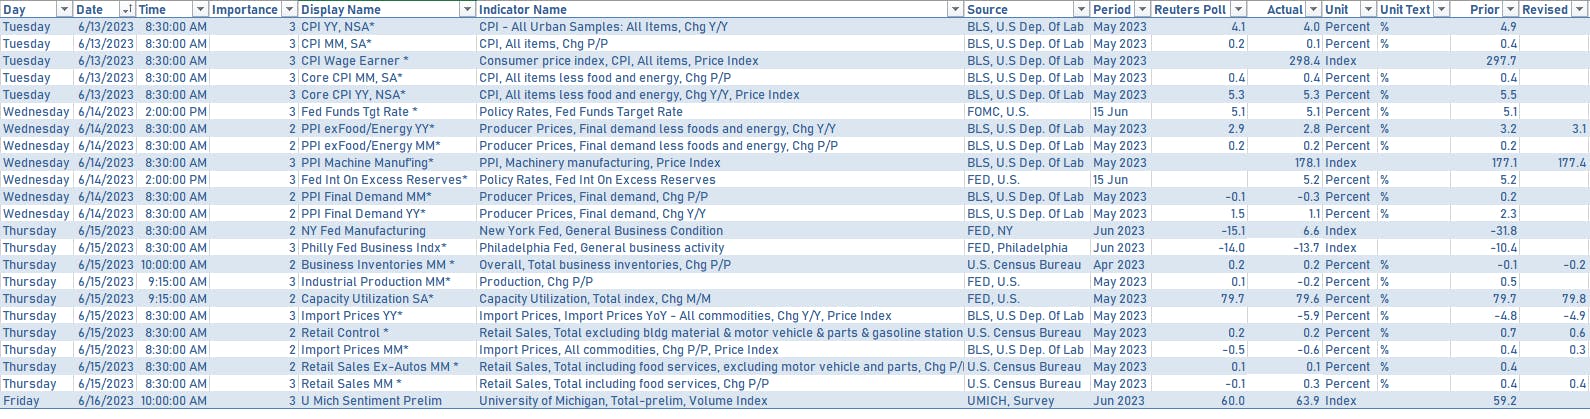 US economic data last week | Sources: phipost.com, Refinitiv data